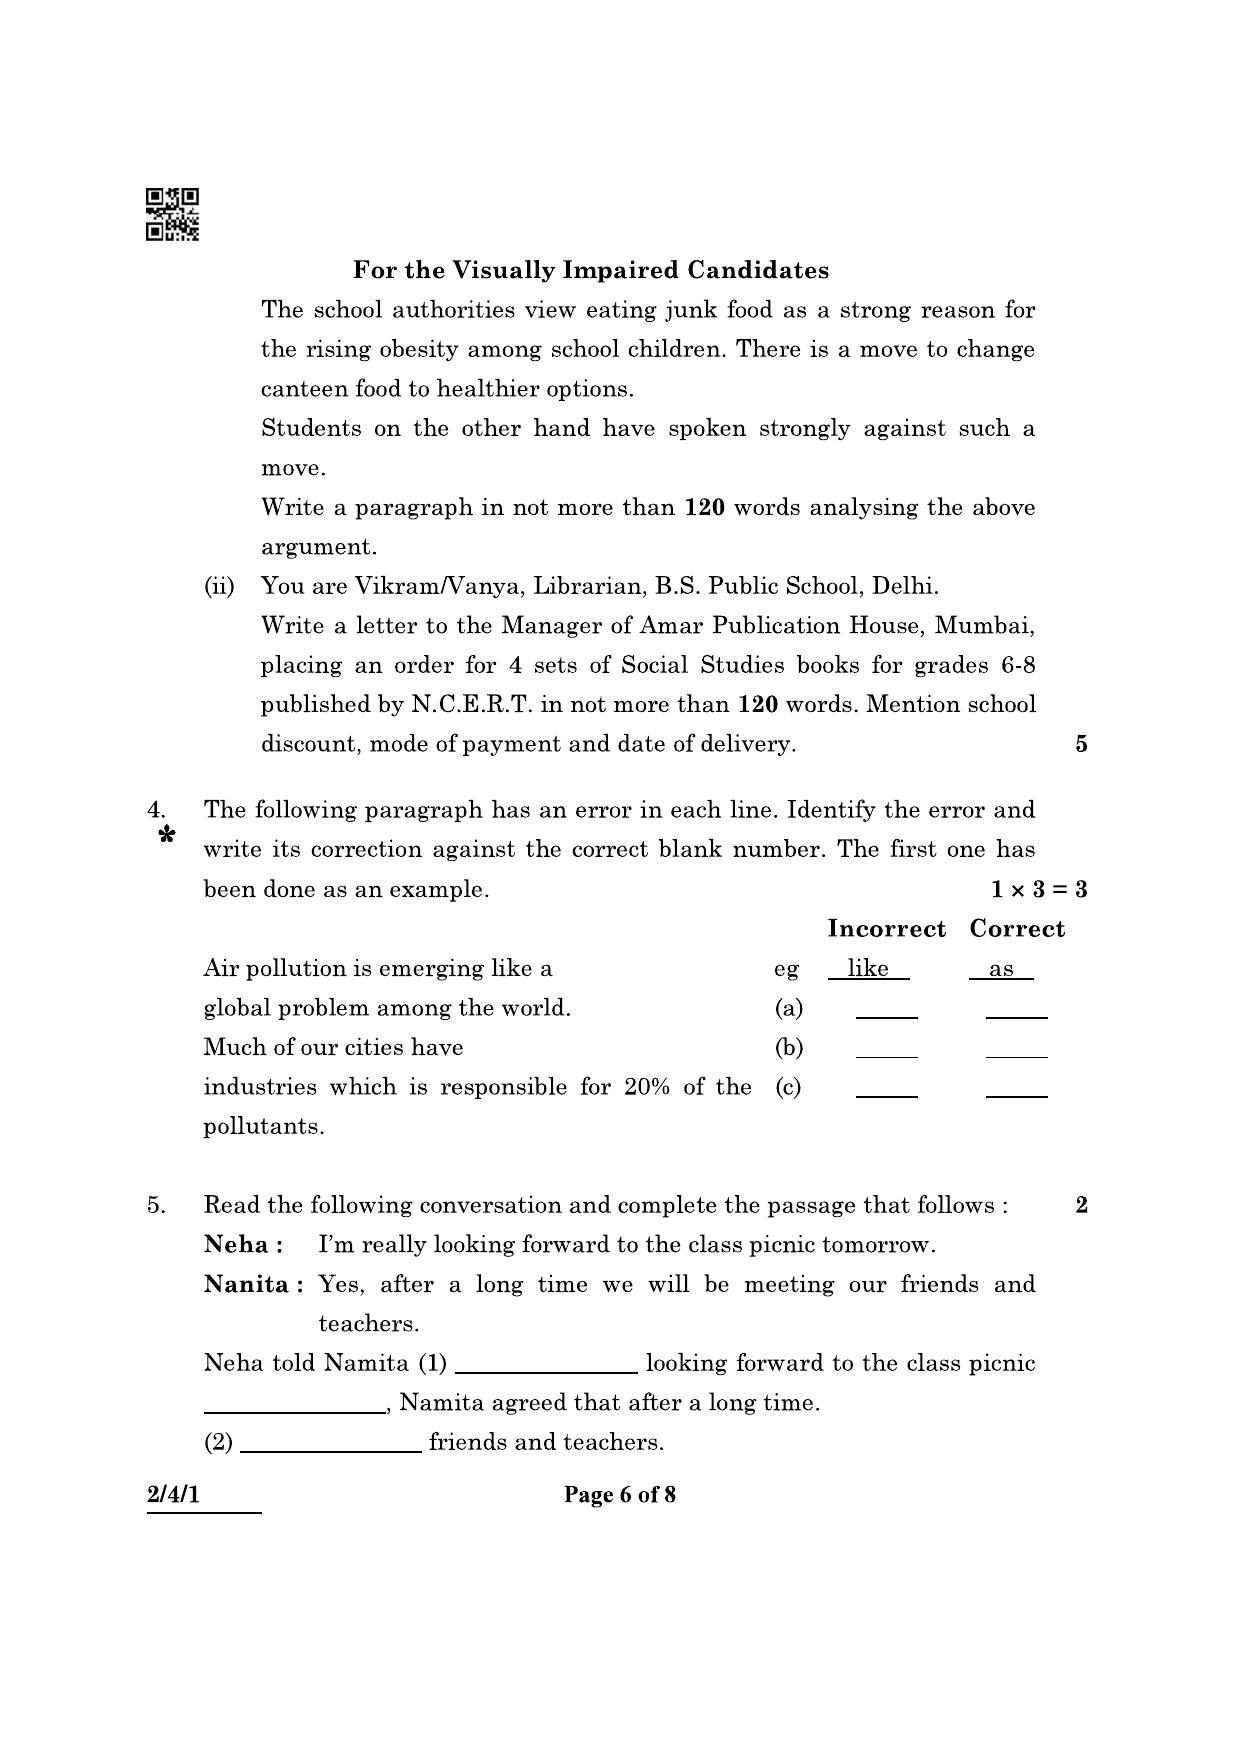 CBSE Class 10 2-4-1 (English L & L) 2022 Question Paper - Page 6